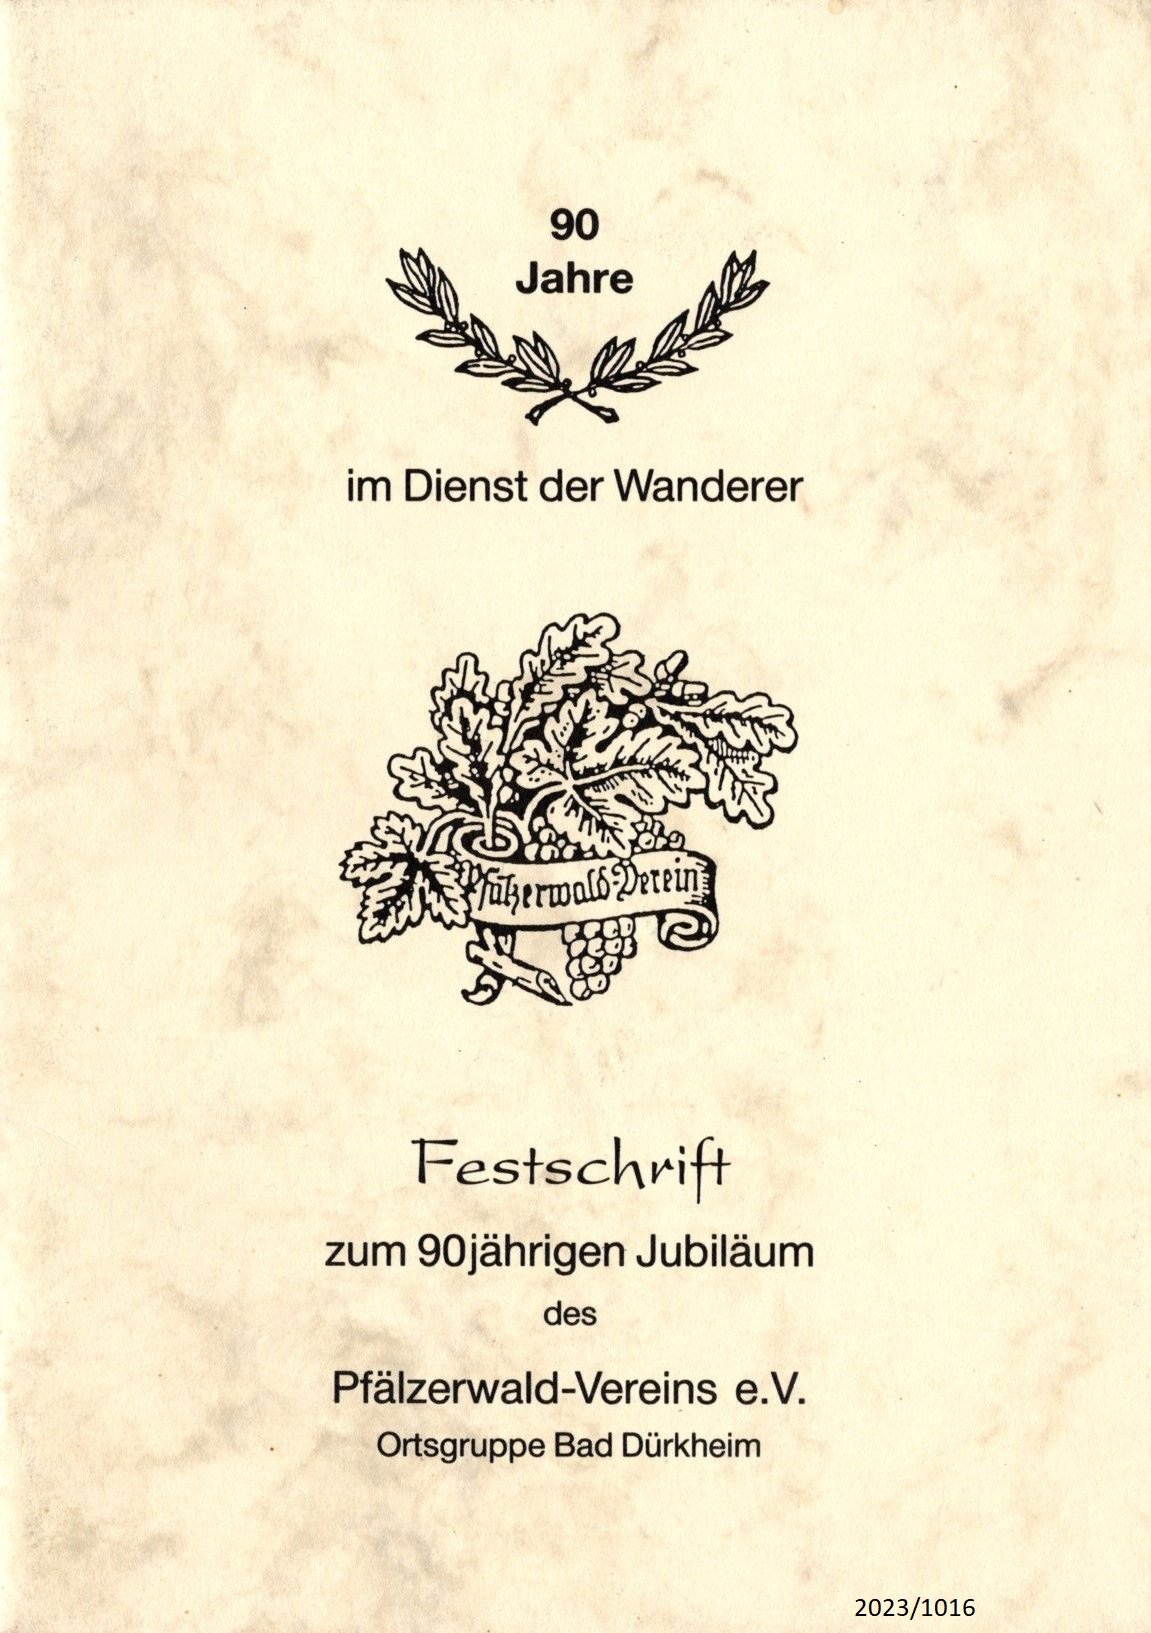 Festschrift zum 90jährigen Jubiläum des Pfälzerwald-Vereins (Stadtmuseum Bad Dürkheim im Kulturzentrum Haus Catoir CC BY-NC-SA)